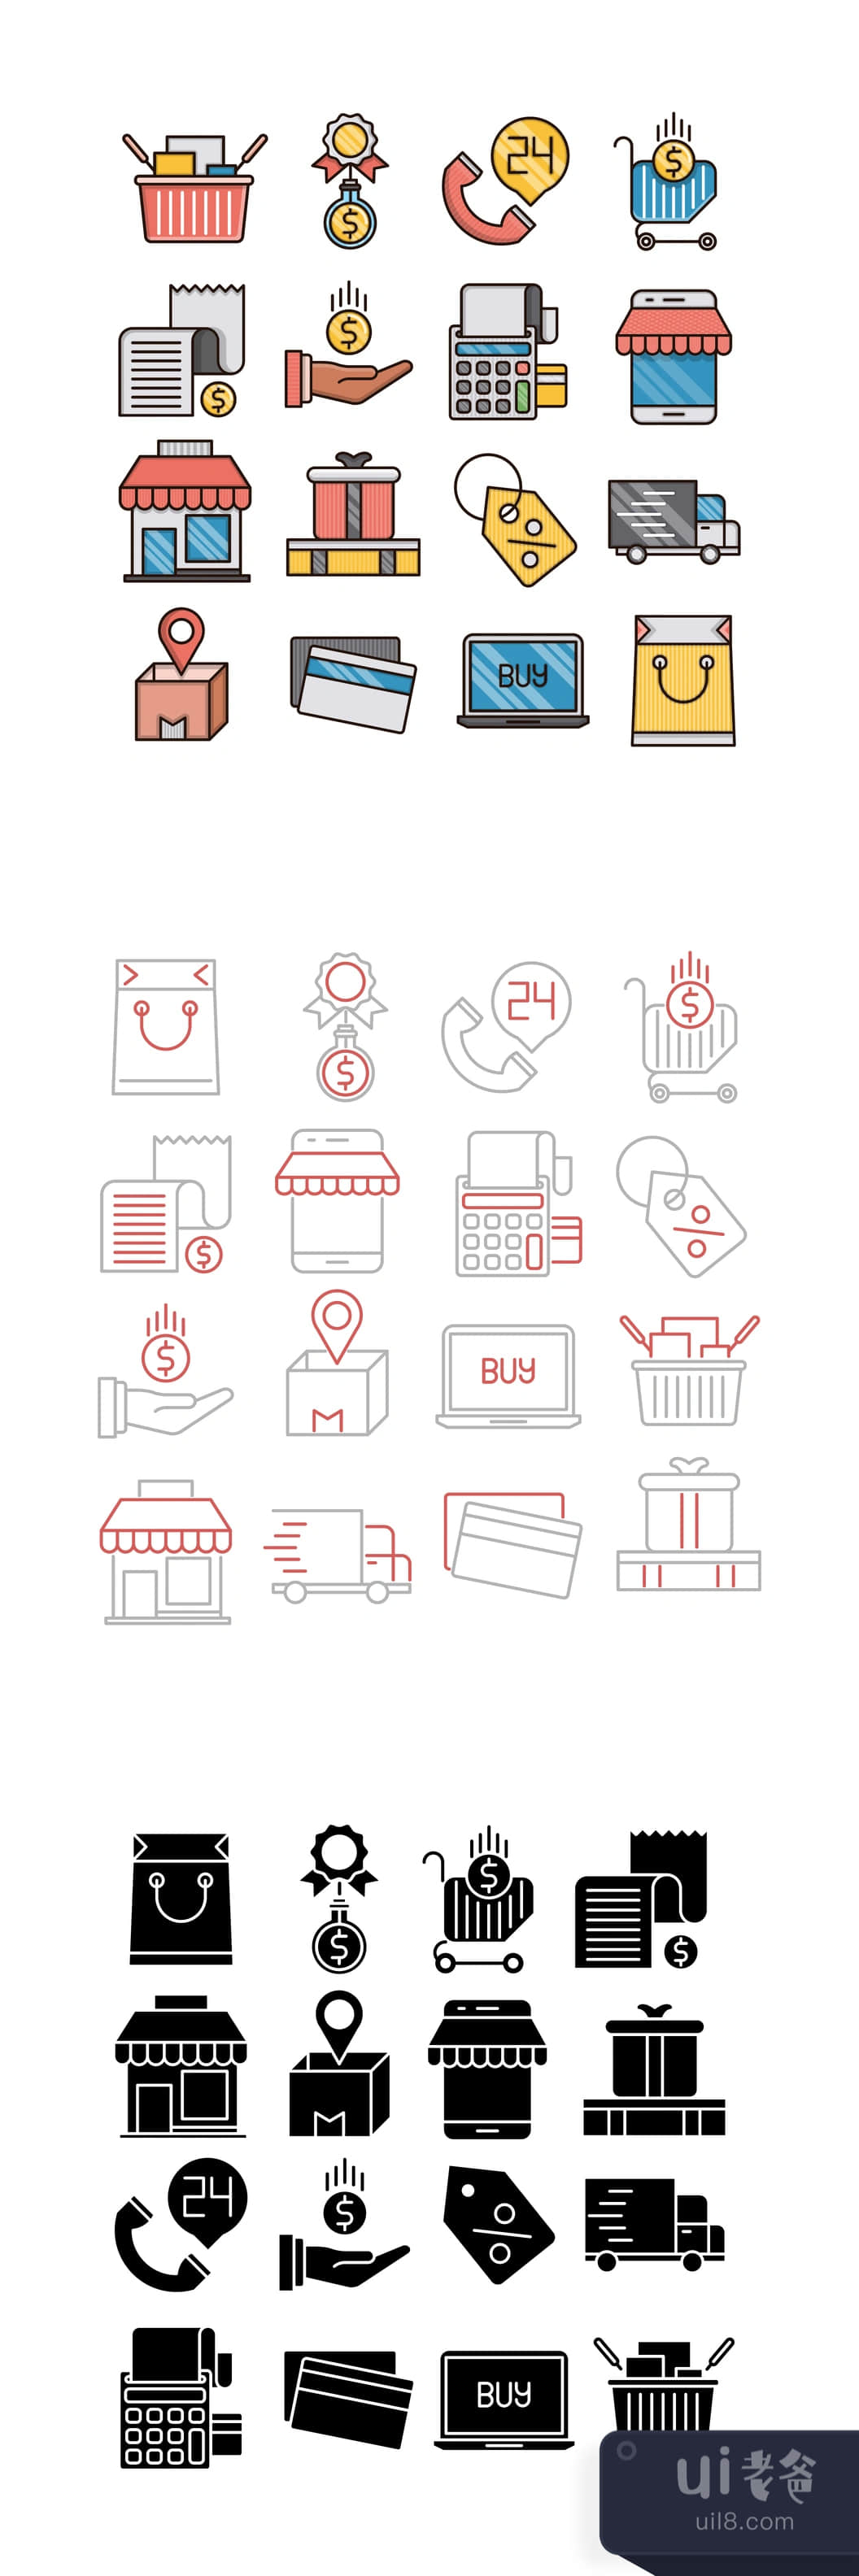 16个商业图标 (16 Commerce Icons)插图1